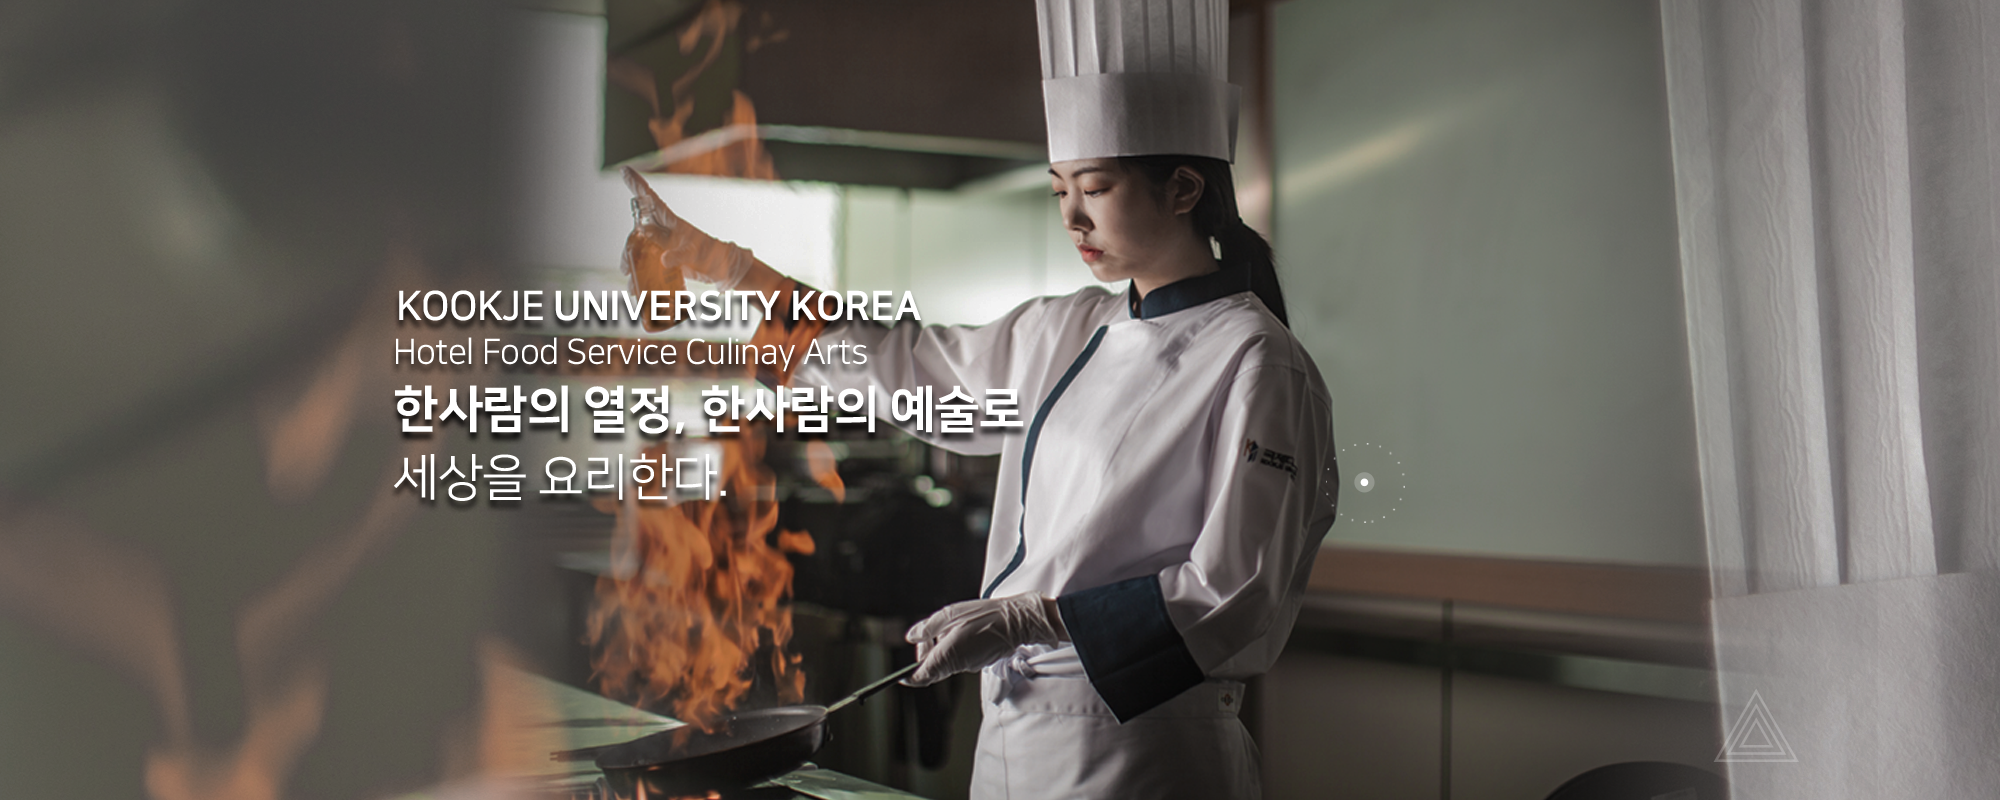 KOOKJE UNIVERSITY KOREA hotel food service culinay arts 한사람의 열정, 한사람의 예술로 세상을 요리한다.